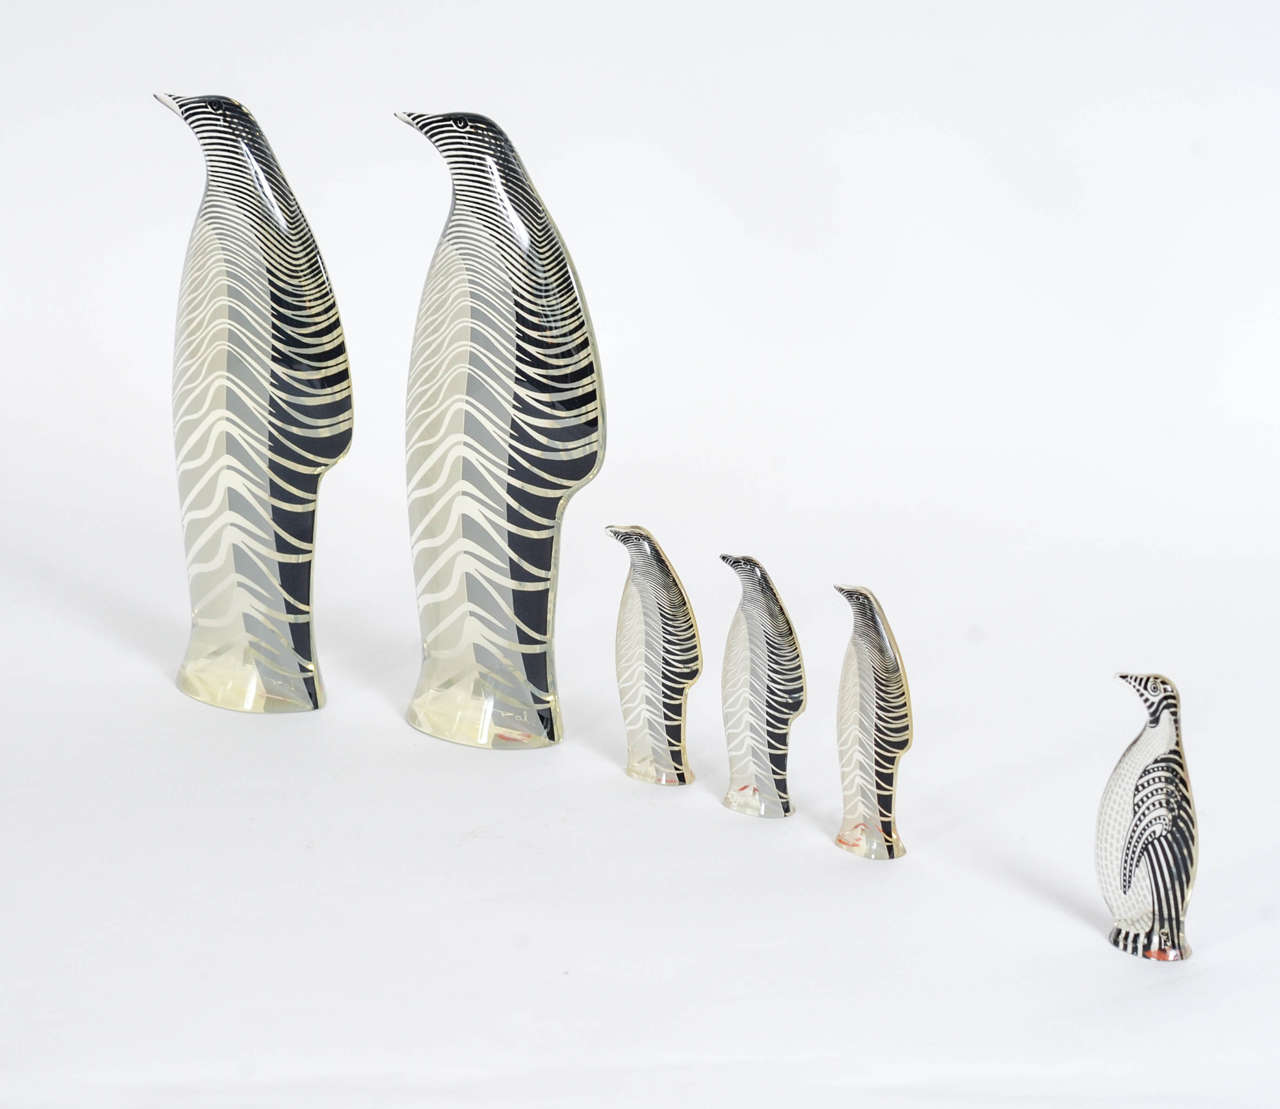 Late 20th Century Set of Six Lucite Penguins Designed by Abraham Palatnik